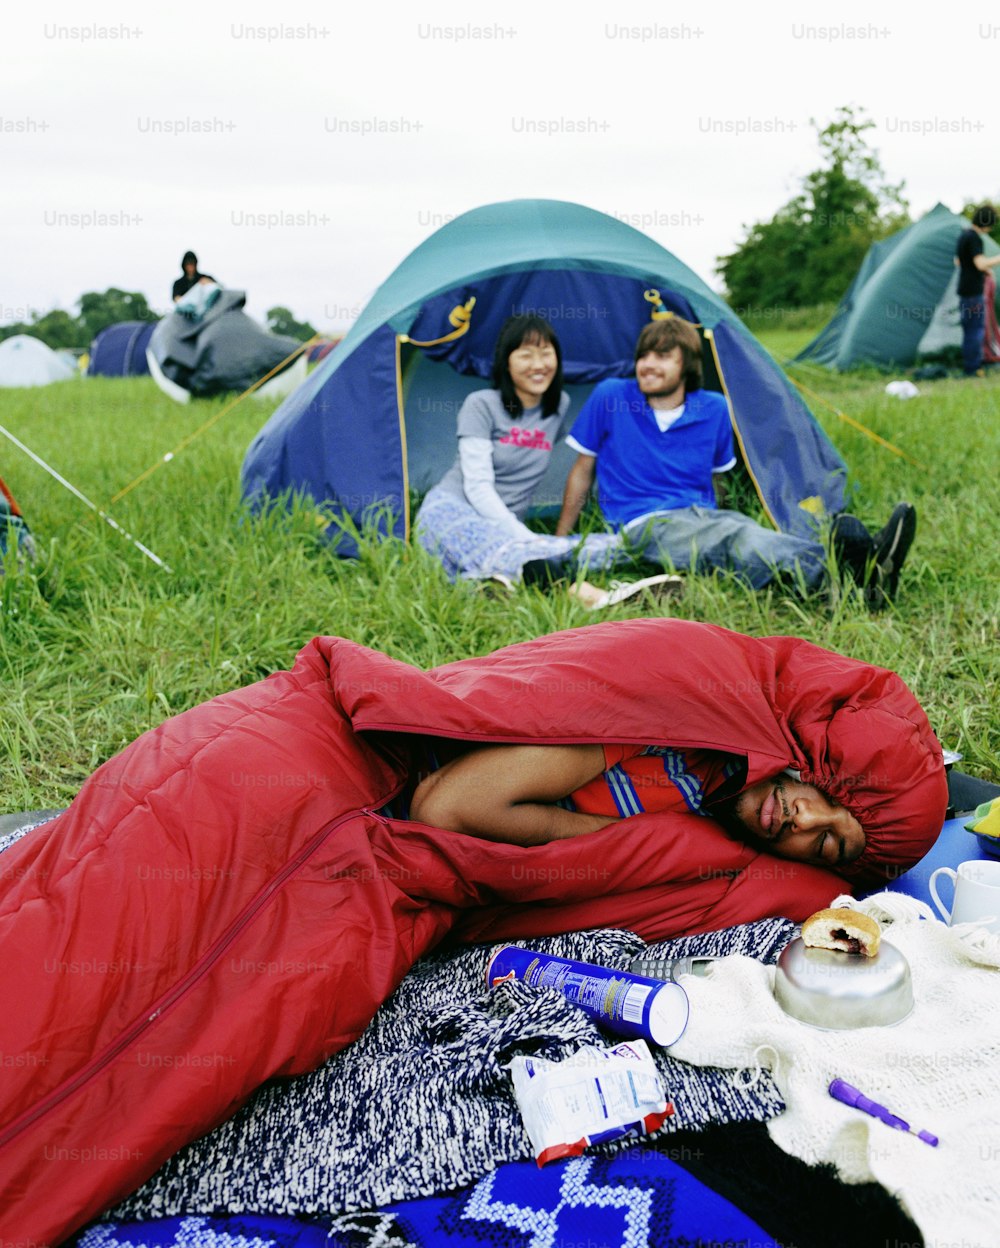 a man sleeping in a sleeping bag in a field